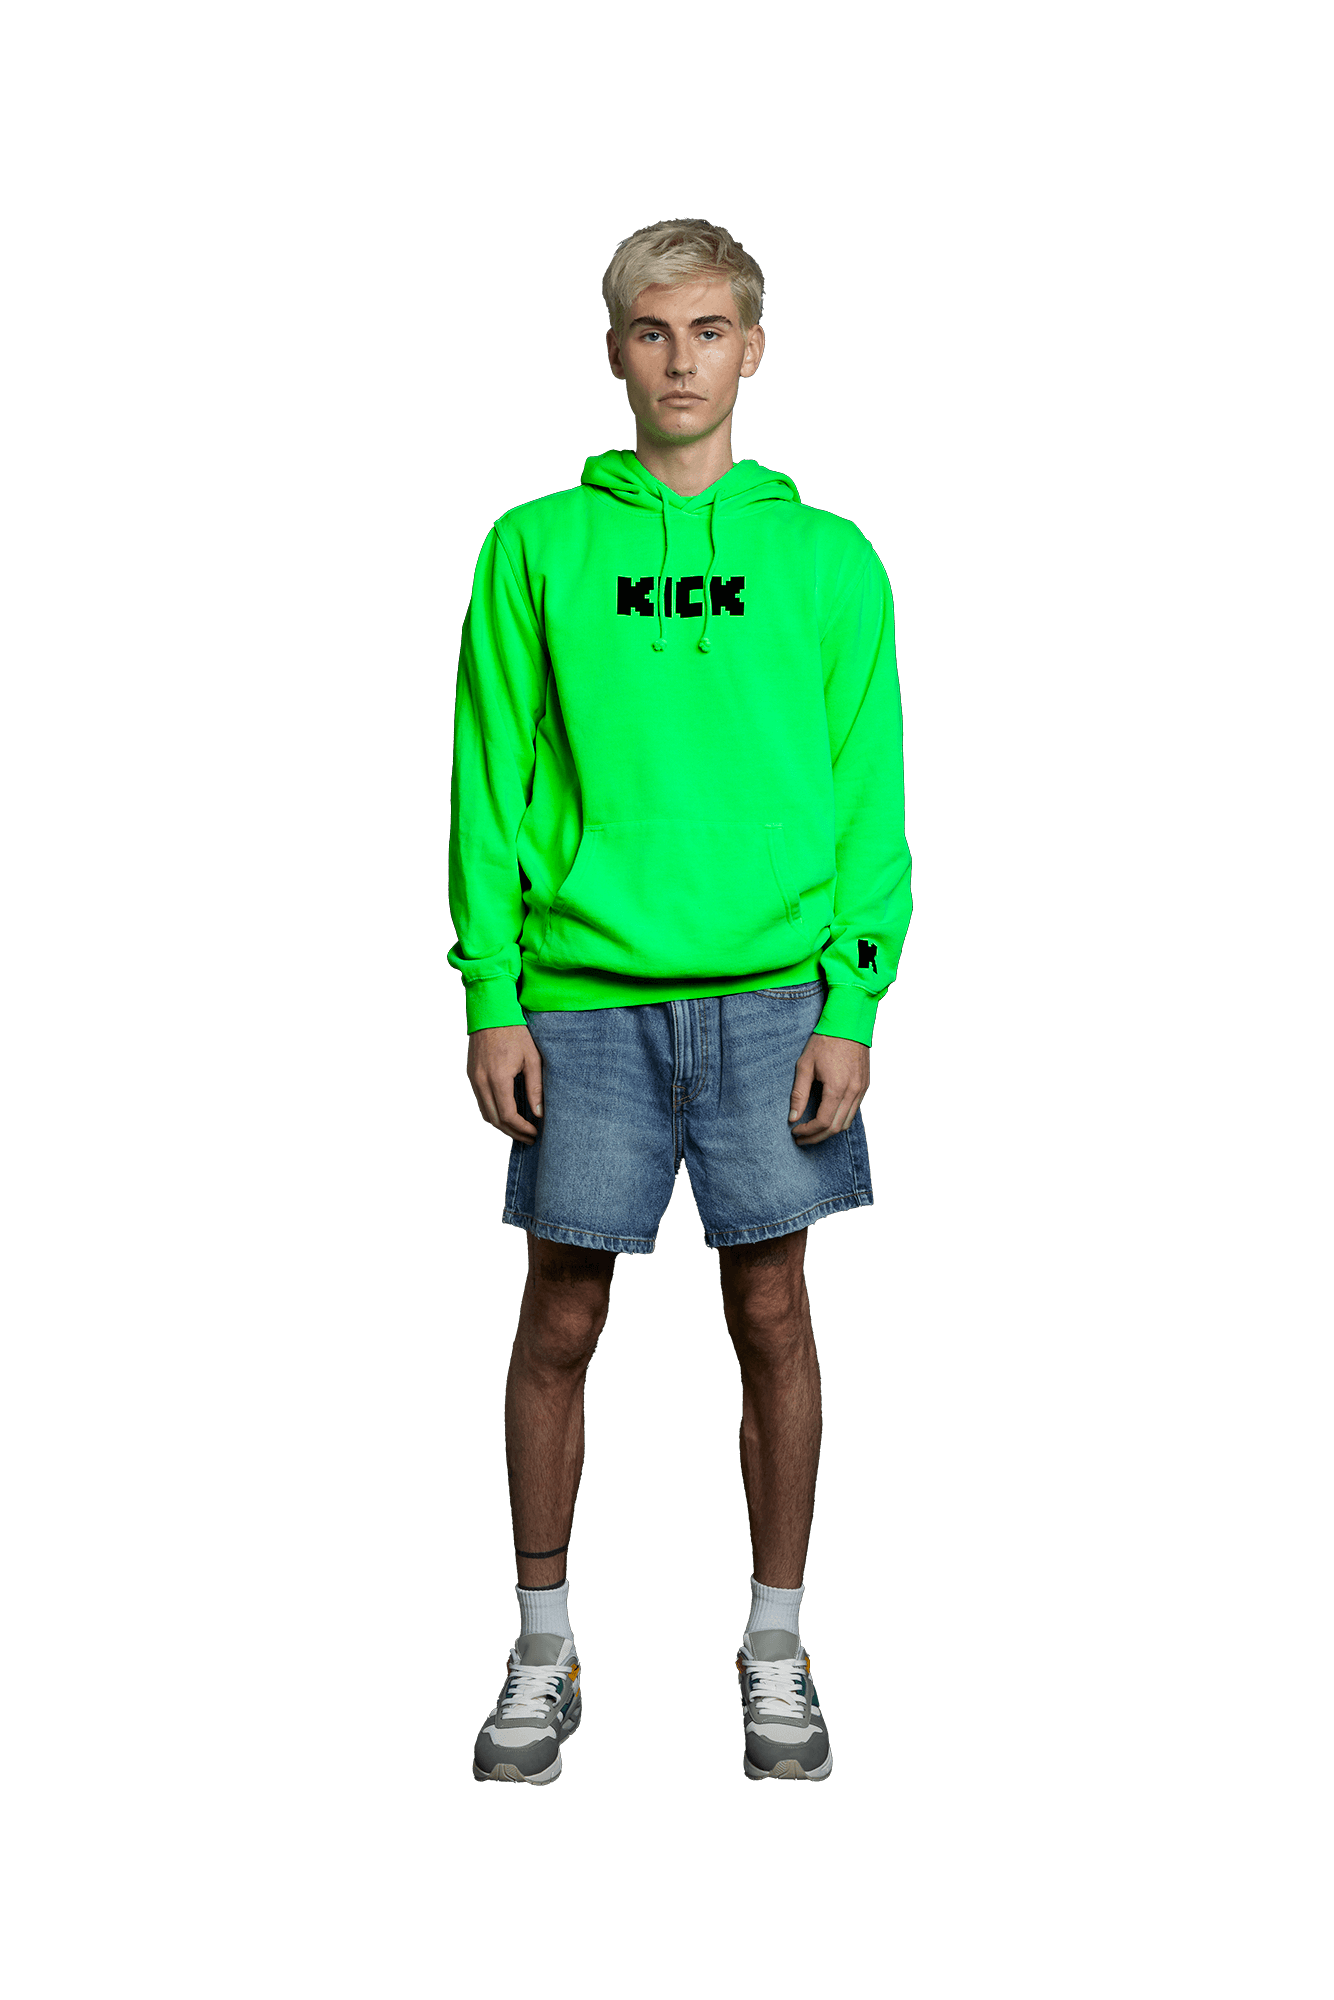 Kick merch Store KICK_Green_Hoodie, Neon Green / M